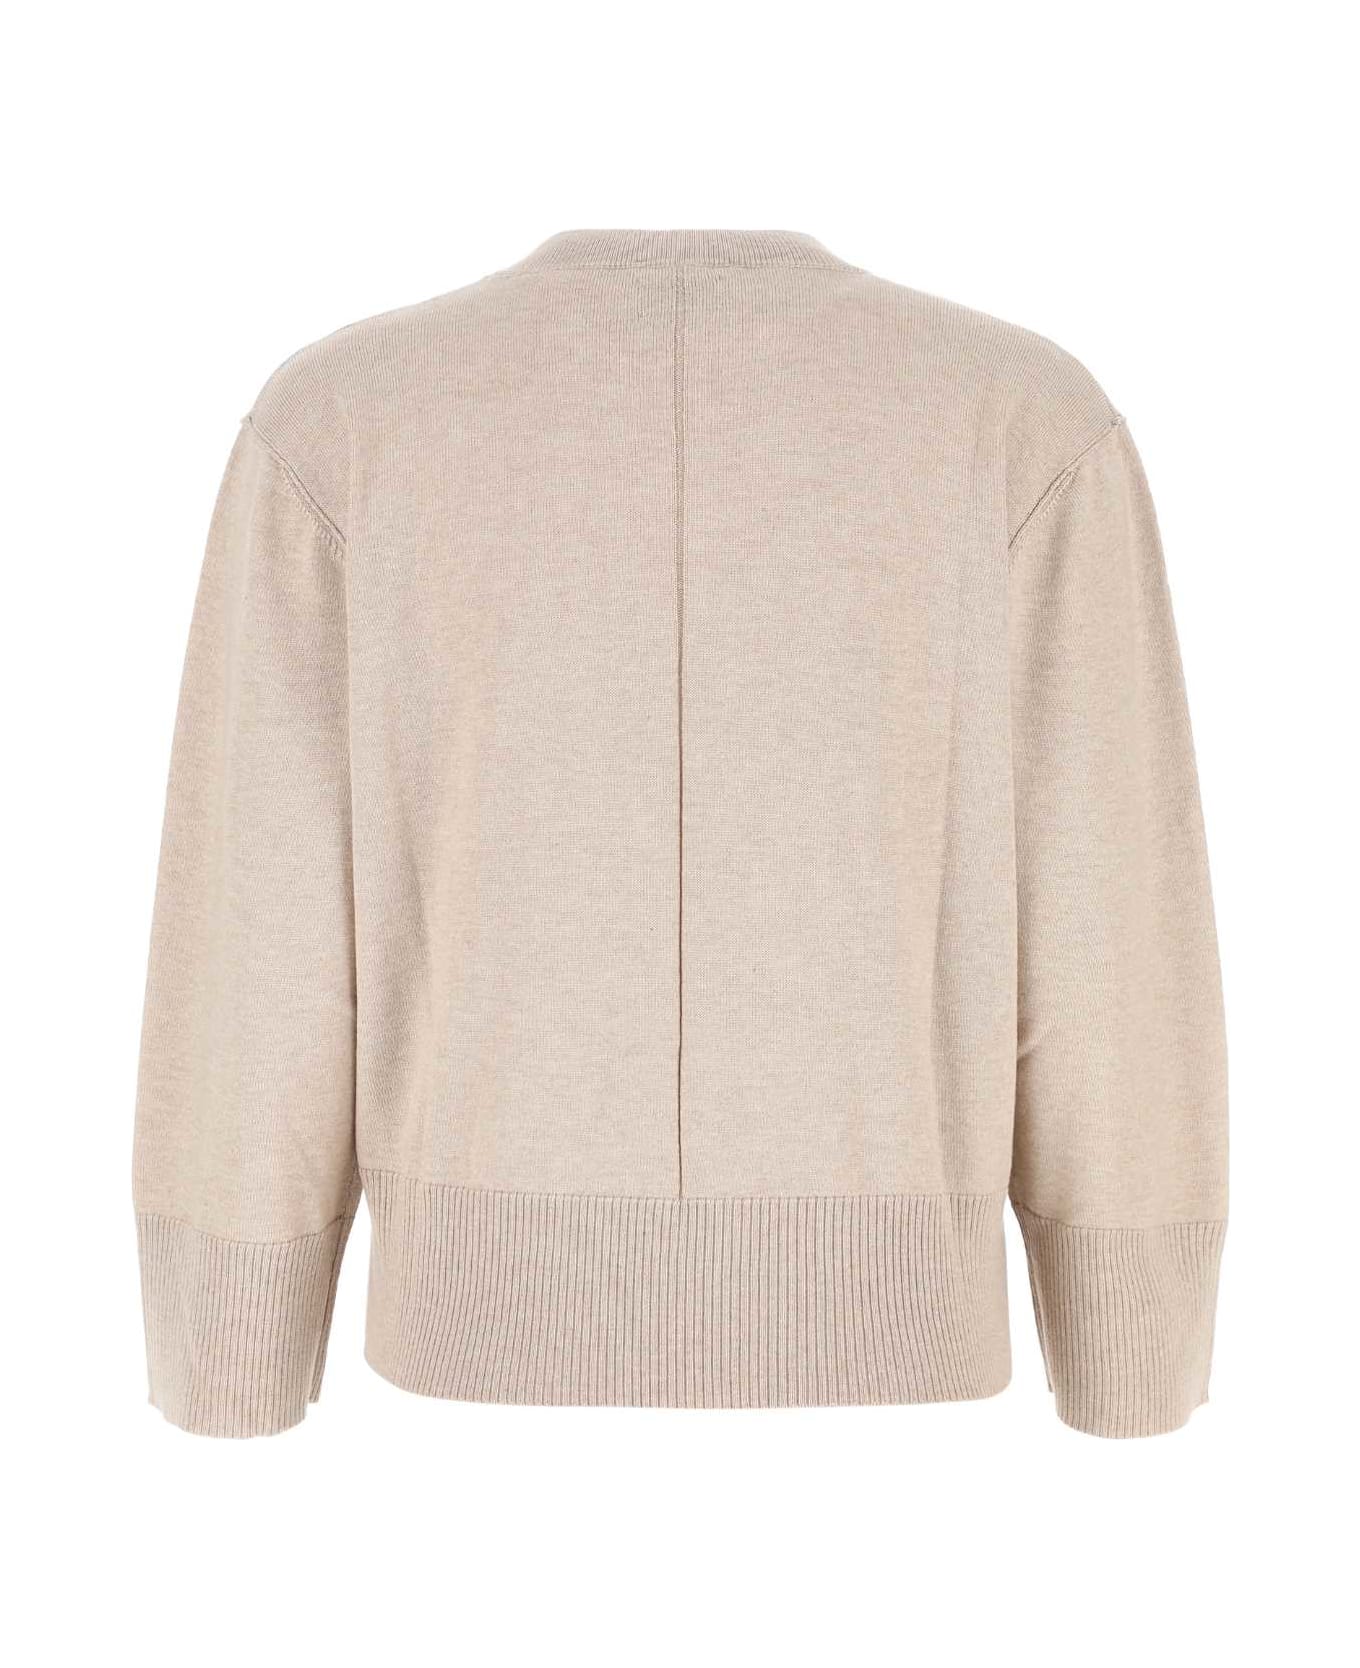 Woolrich Cappuccino Cotton Blend Sweater - 824 ニットウェア